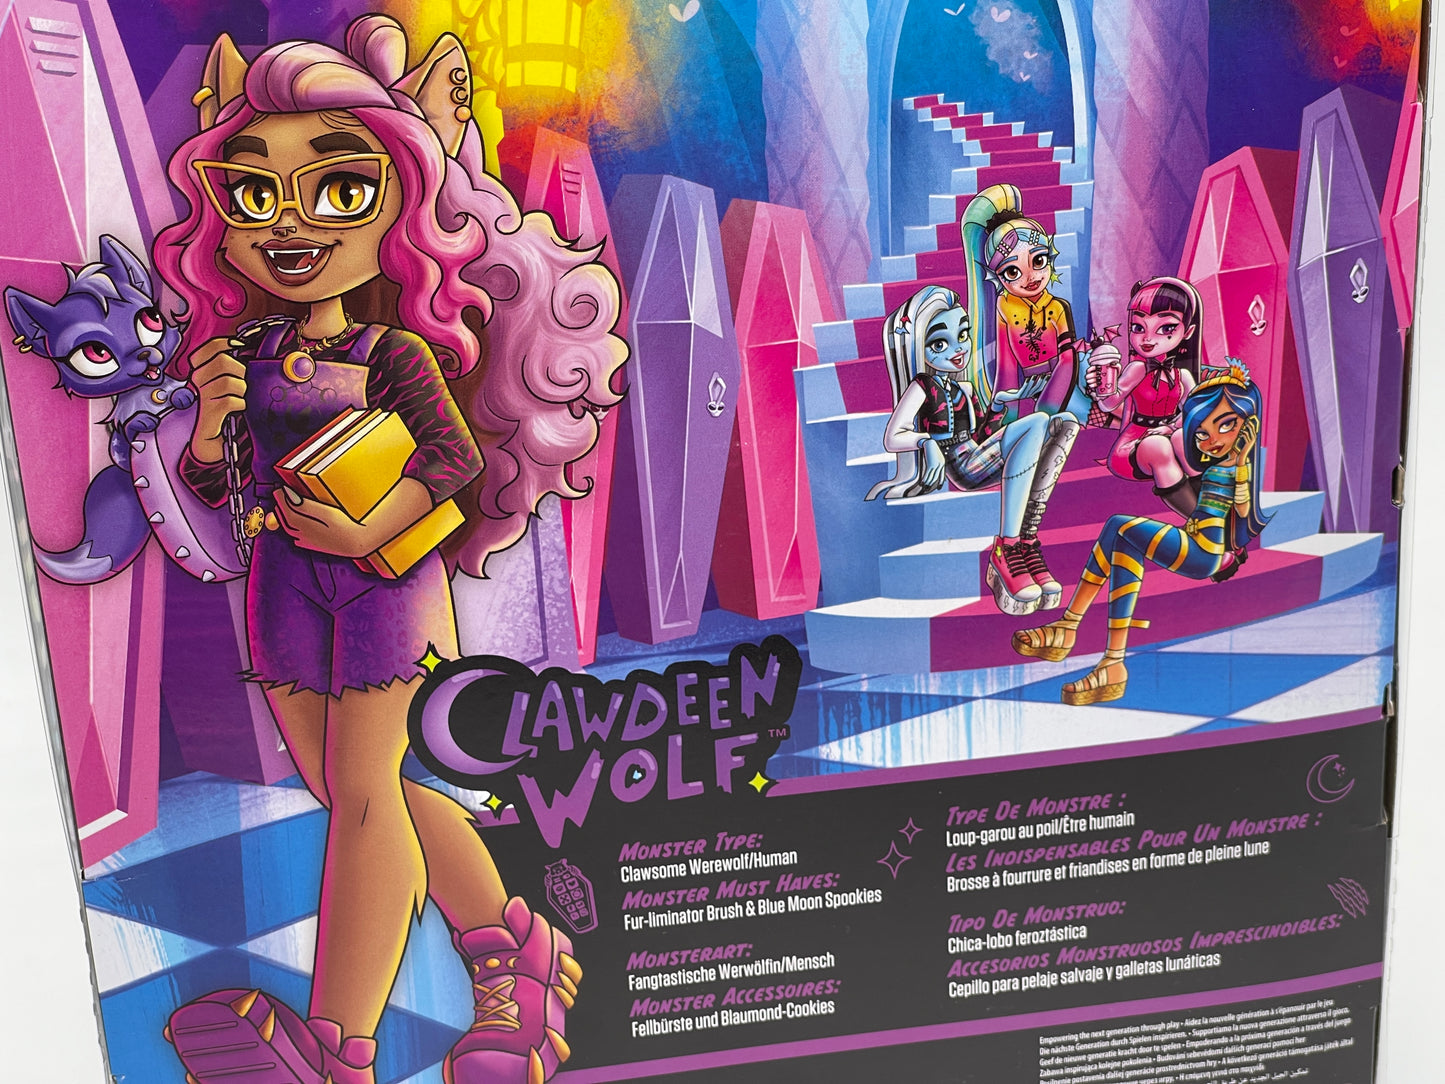 Monster High "Clawdeen Wolf mit Crescent" Reboot, Mattel (2022)